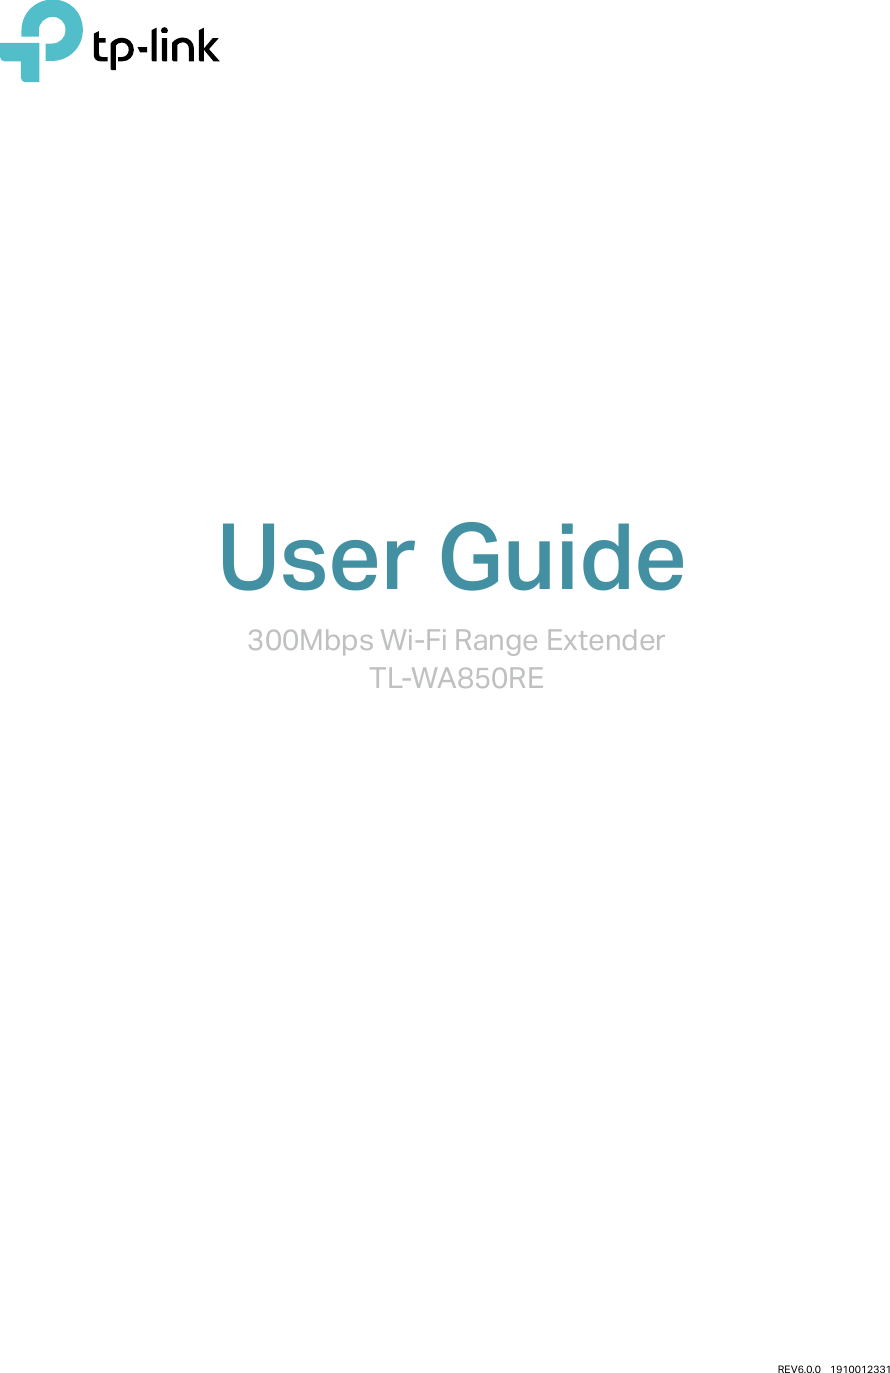 User Guide300Mbps Wi-Fi Range ExtenderTL-WA850REREV6.0.0    1910012331